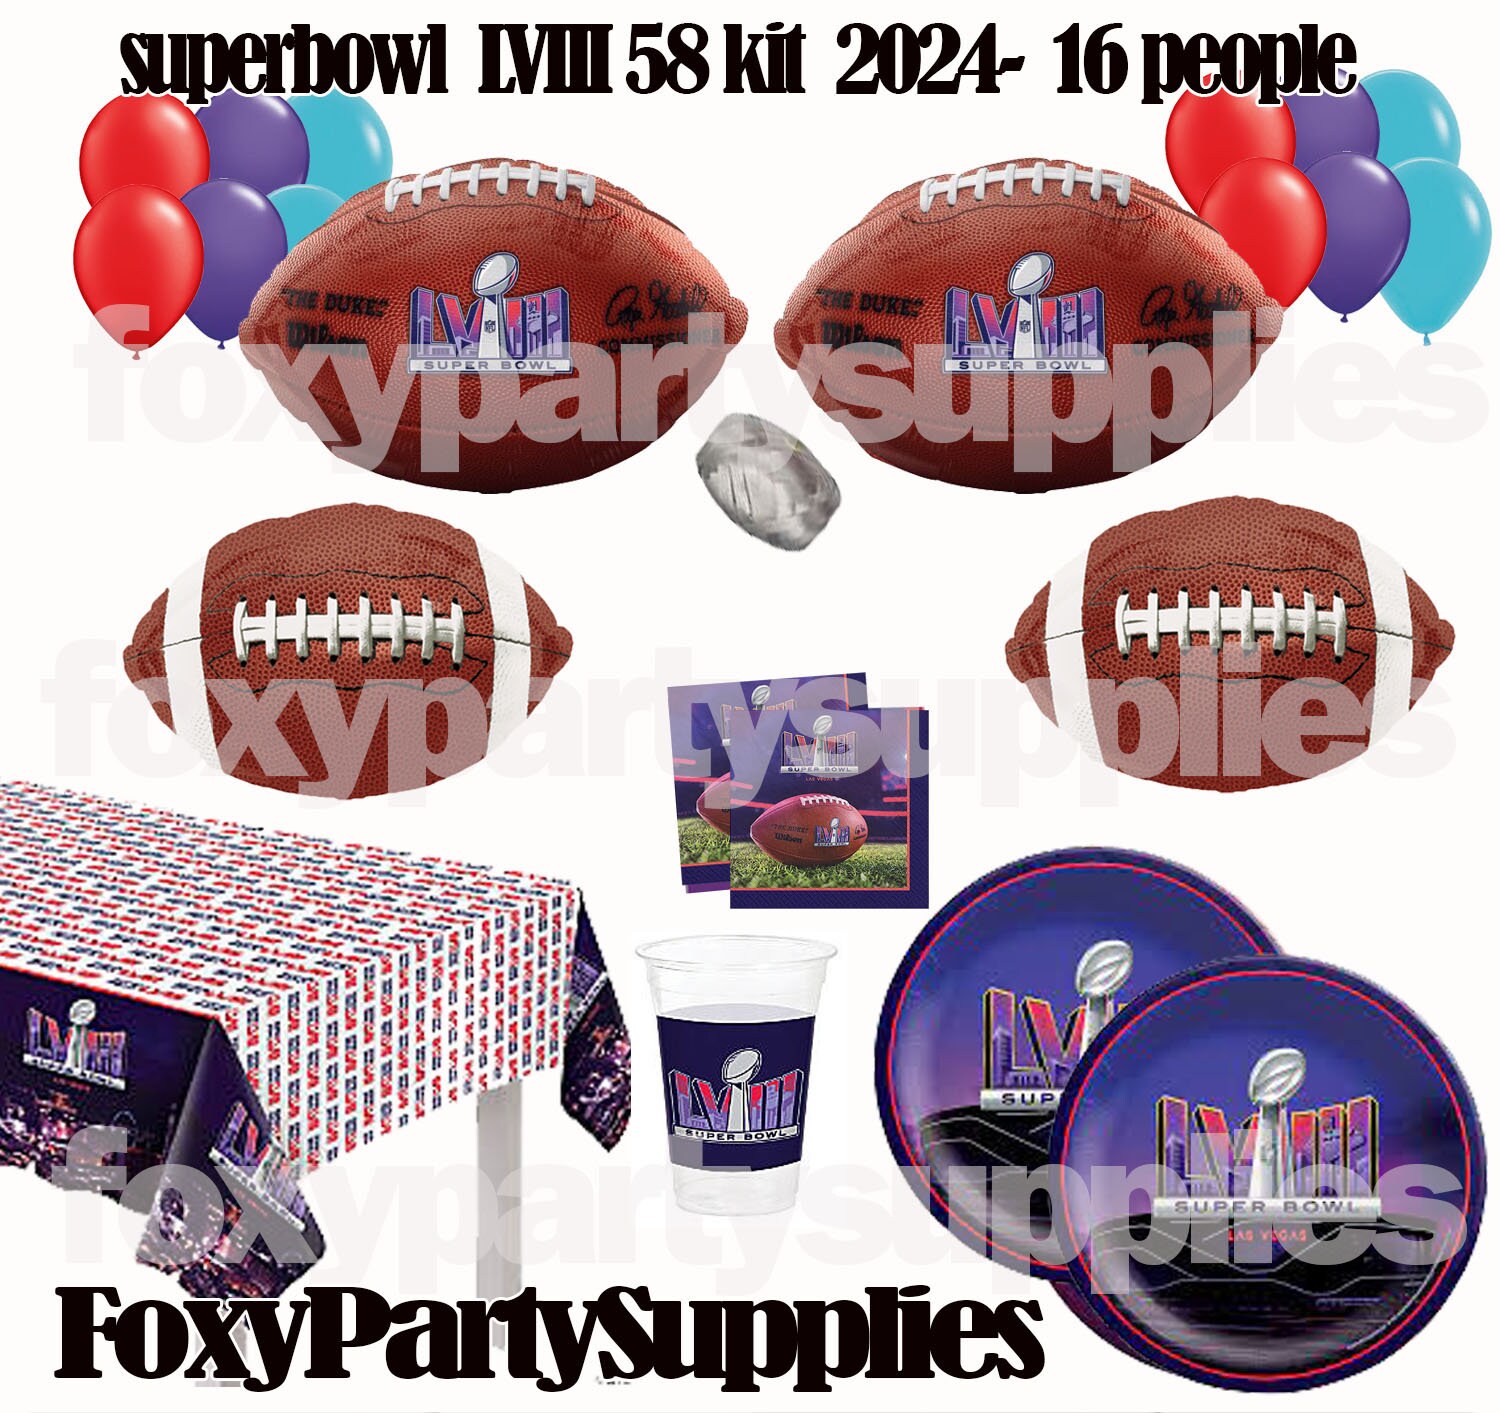 Super Bowl LVII Gifts, Super Bowl Accessories, Pins